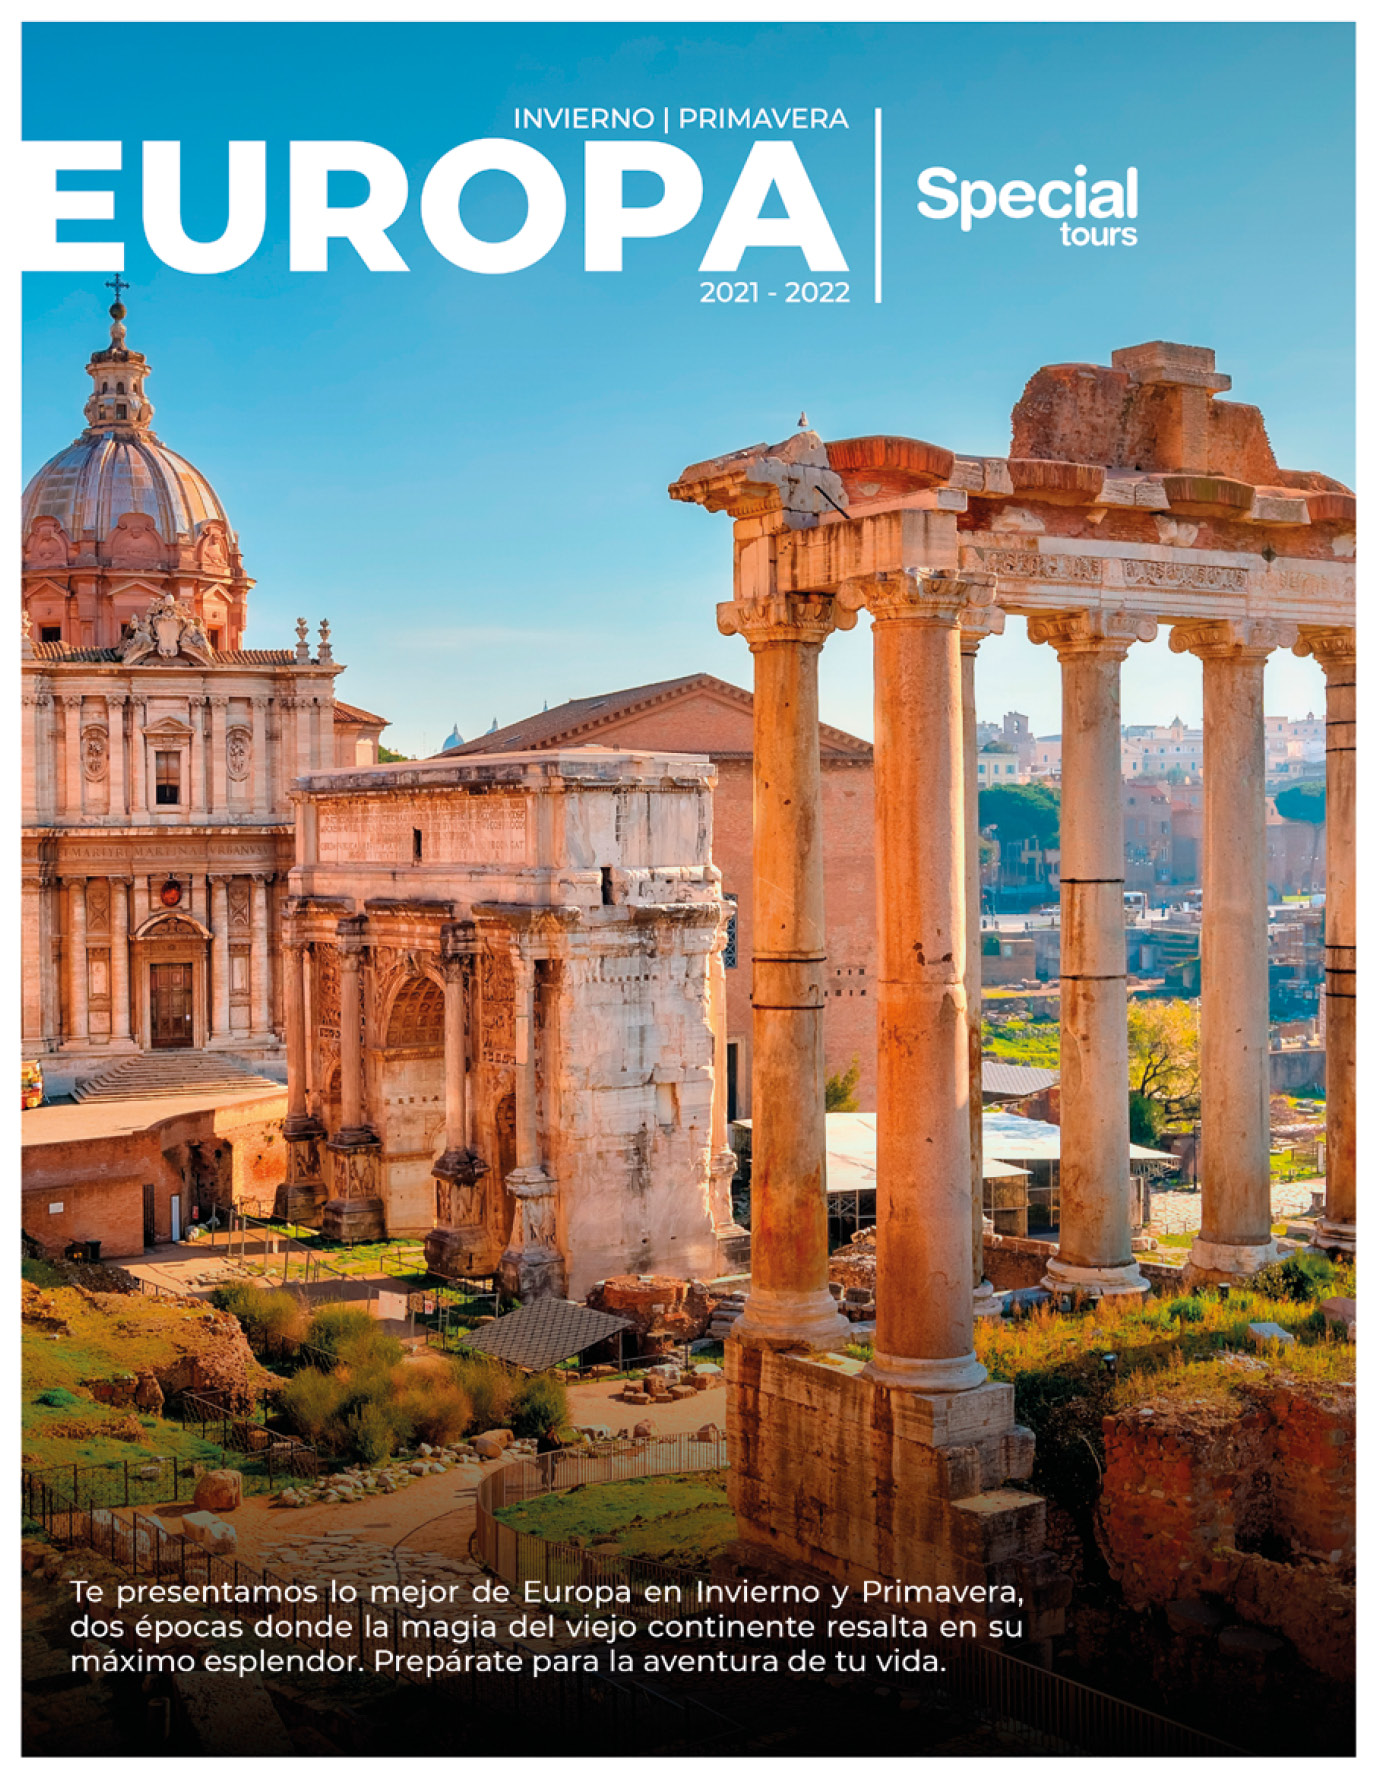 Catalogo Special Tours Europa otoño 2021 invierno y primavera 2022